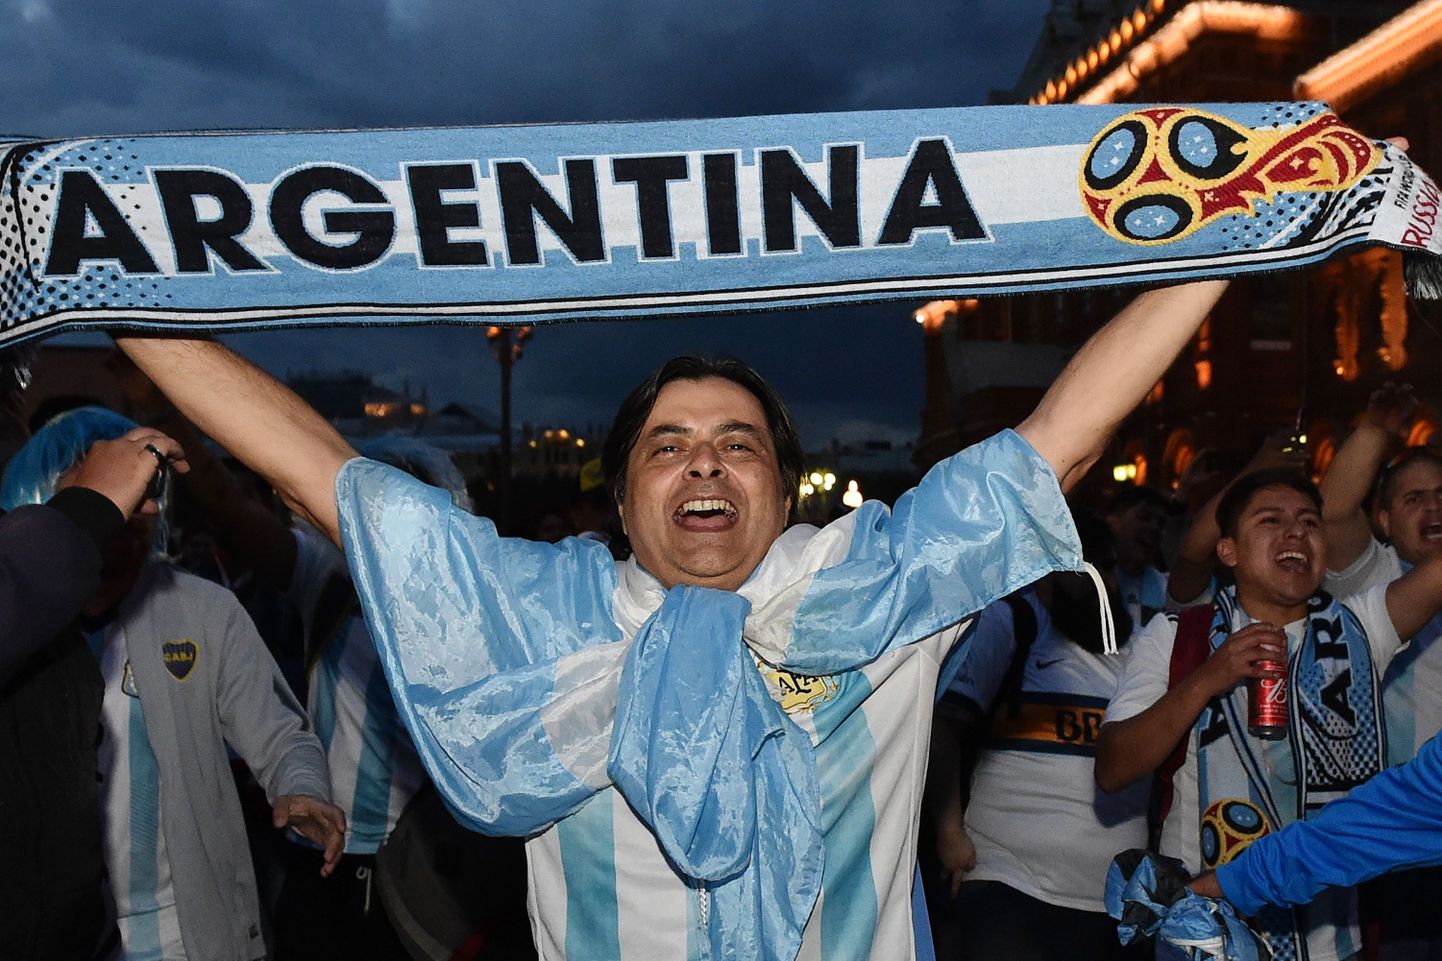 Argentiina jalgpallifänn. Pilt on illustratiivne.